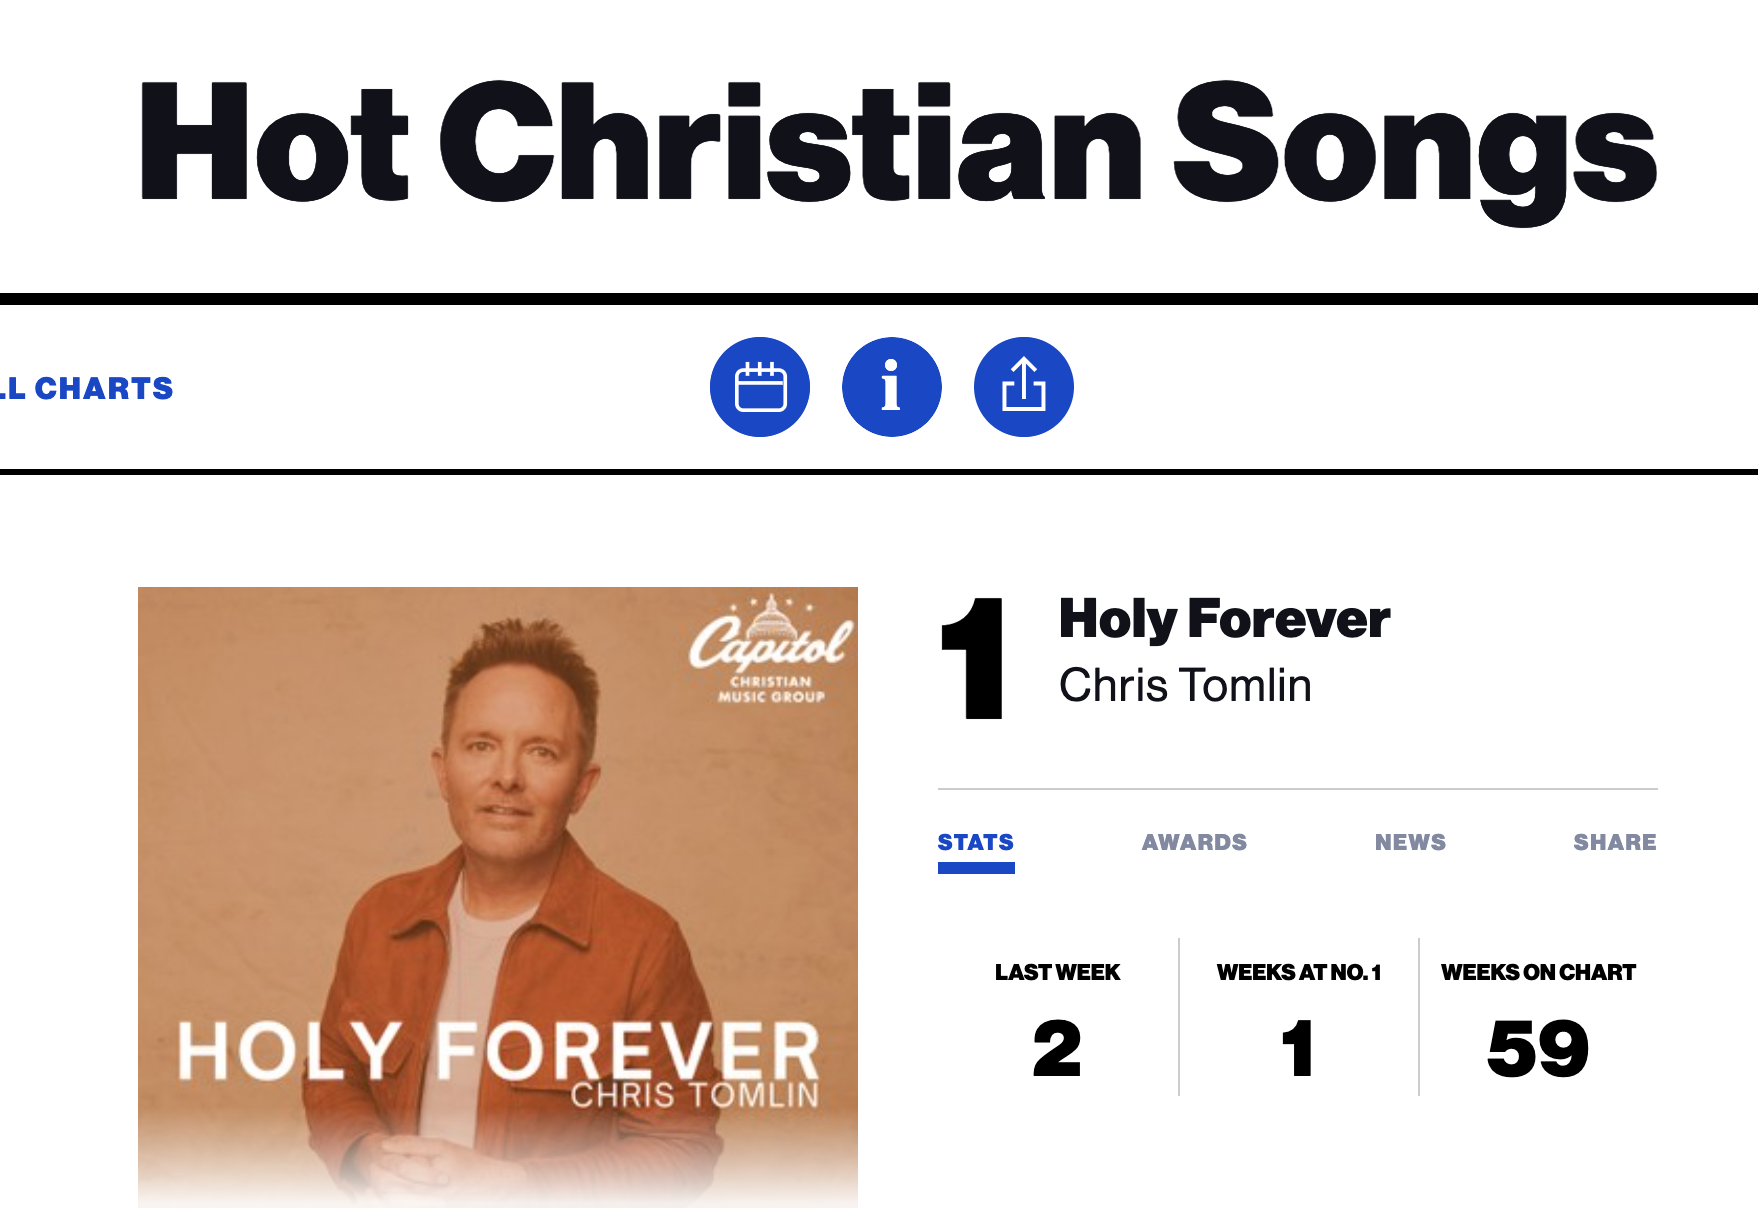 Chris Tomlin Wraps Record Run to No. 1 on Hot Christian